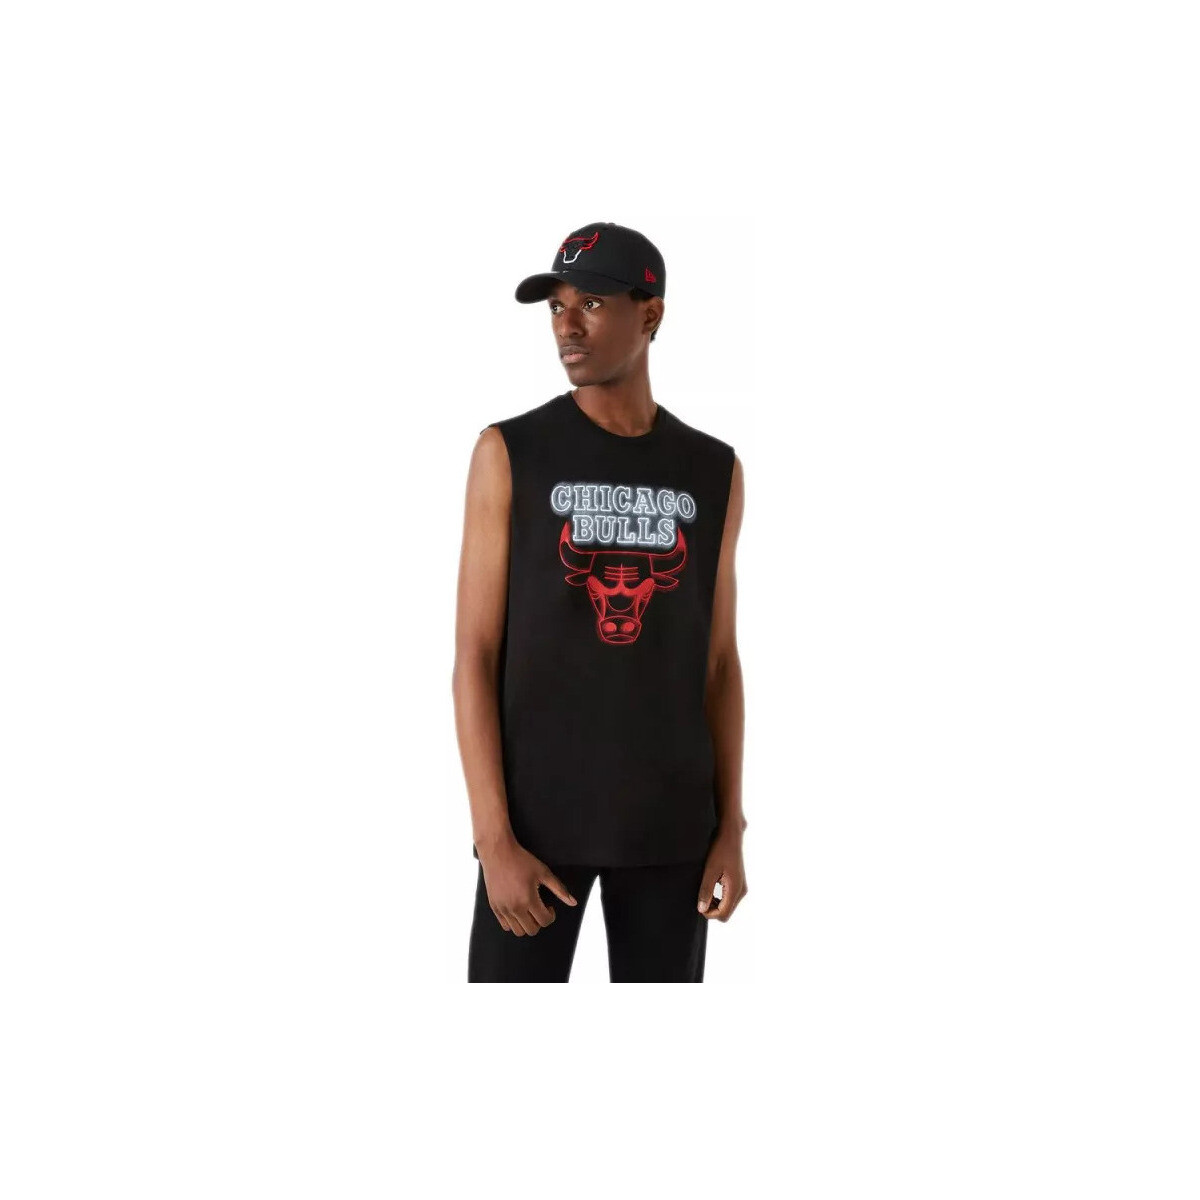 Vêtements Homme Débardeurs / T-shirts sans manche New-Era NBA NEON SLEEVELESS CHICAGO BULLS Noir